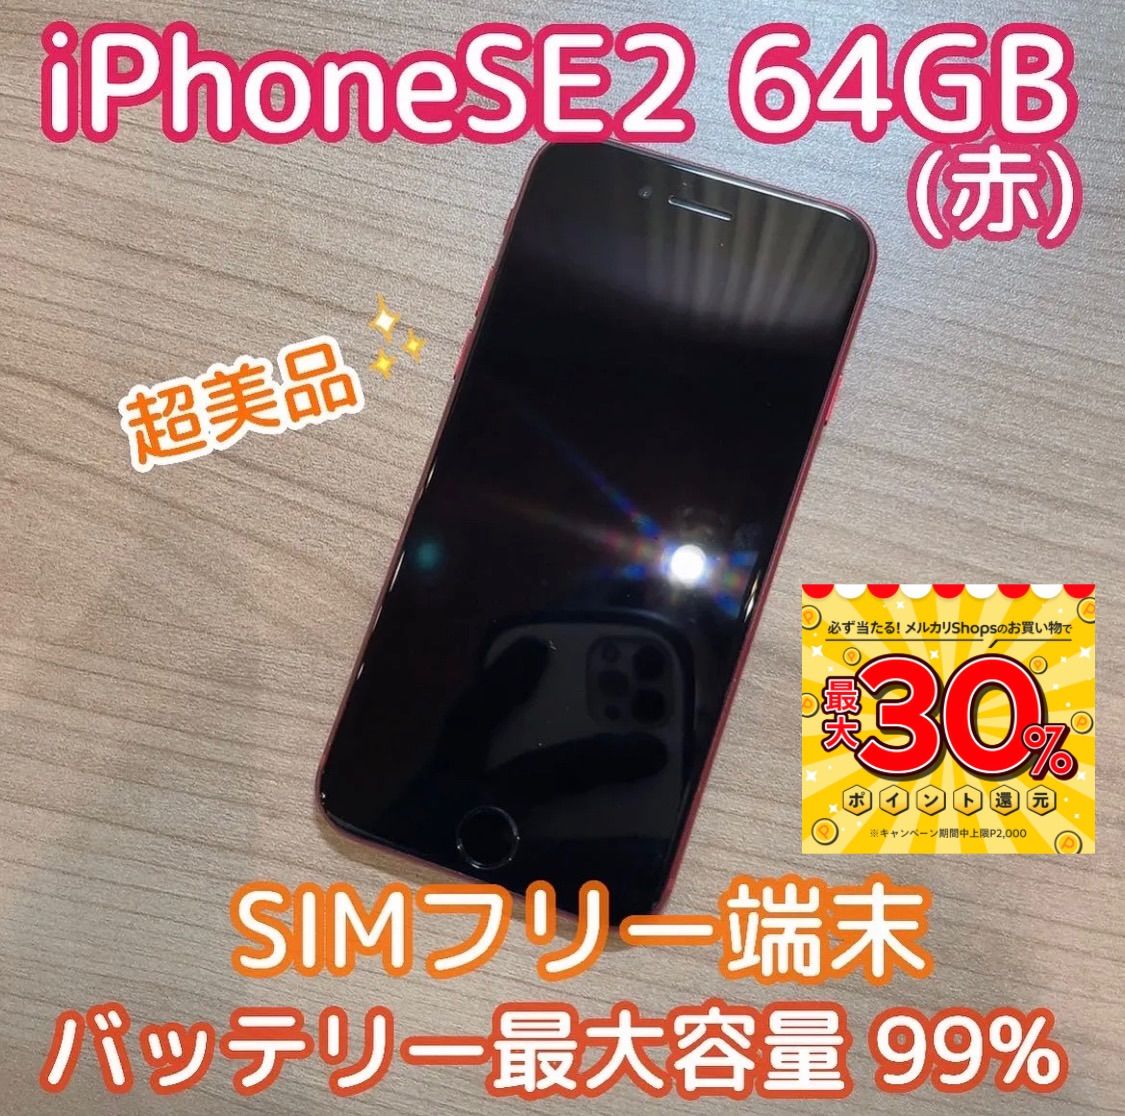 iPhoneSE2 64GB 赤 - むぎむぎショップ - メルカリ